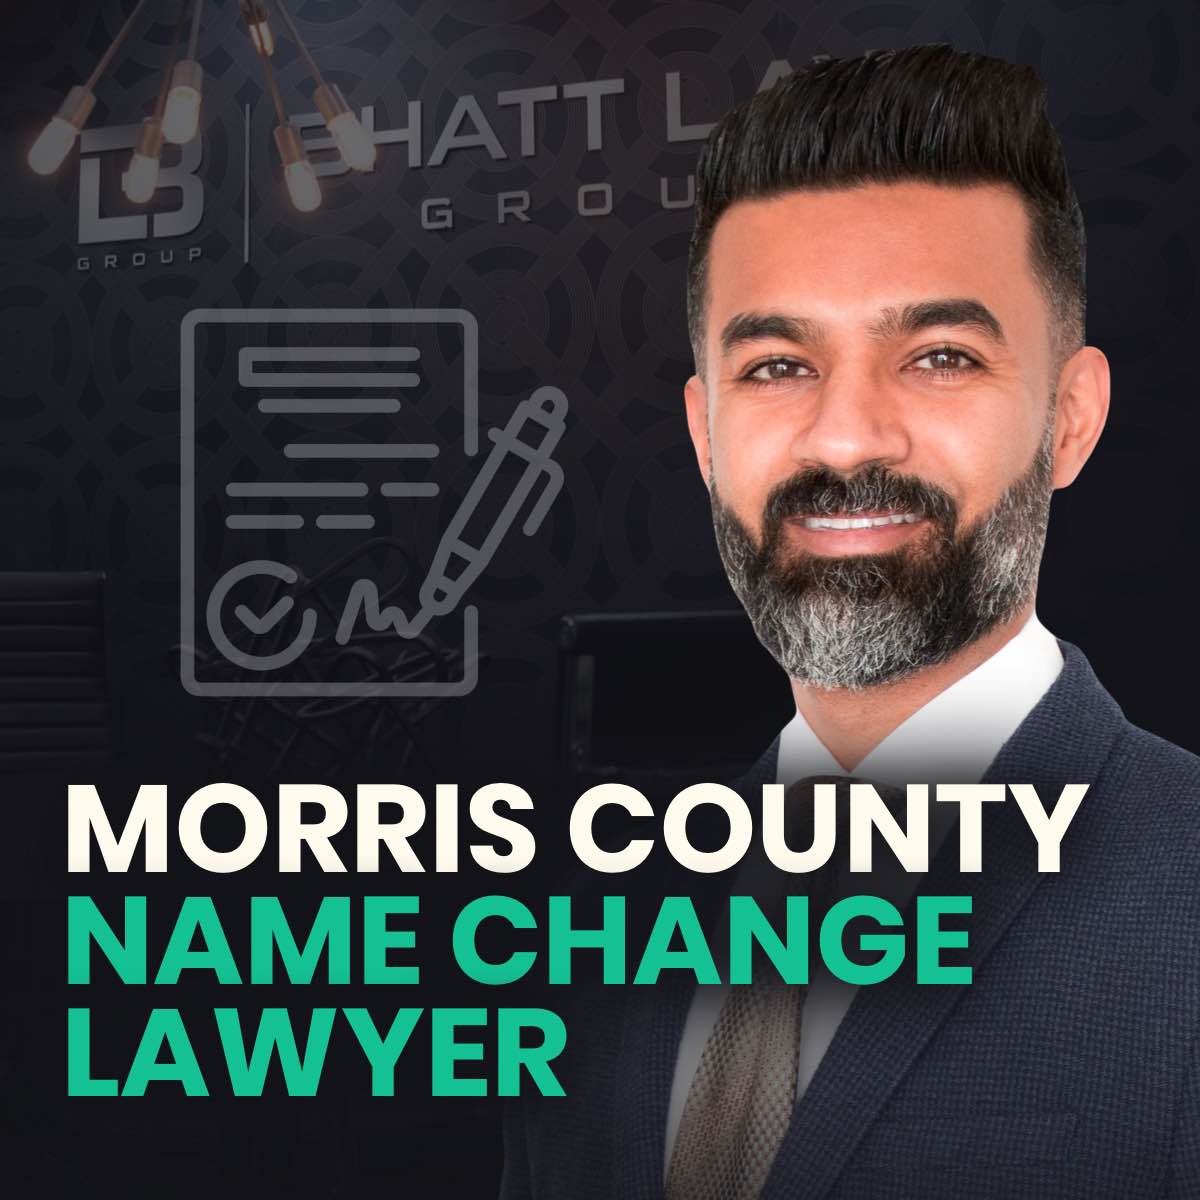 Morris County Name Change Lawyer